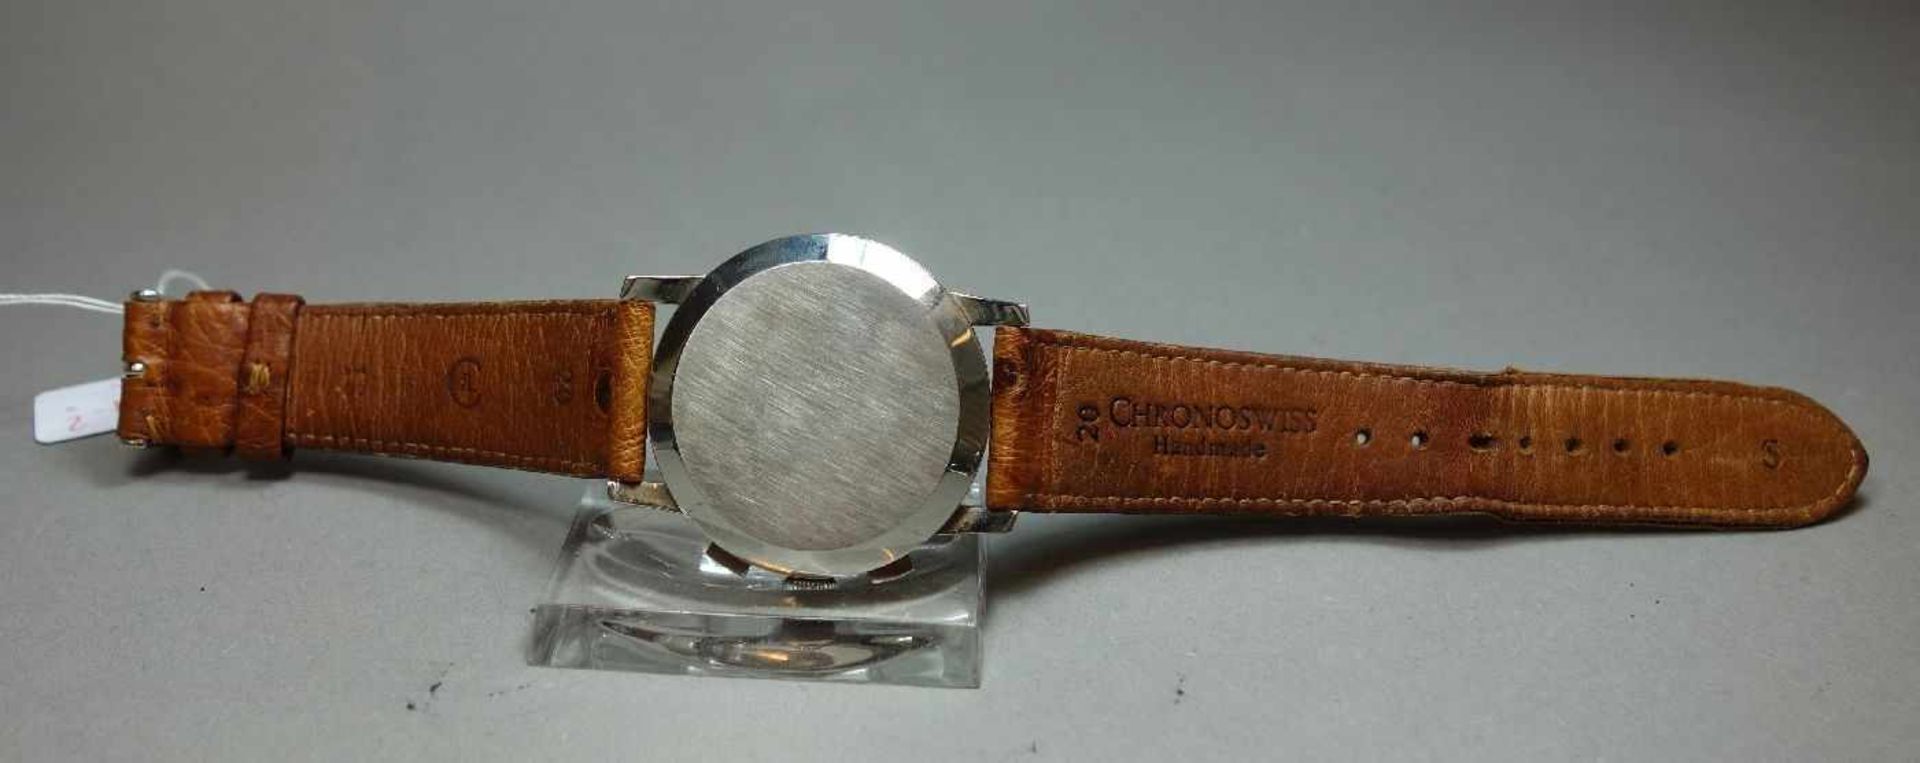 BREITLING VINTAGE ARMBANDUHR / CHRONOGRAPH MIT VOLLKALENDER / wristwatch, Handaufzug, Manufaktur - Image 3 of 10